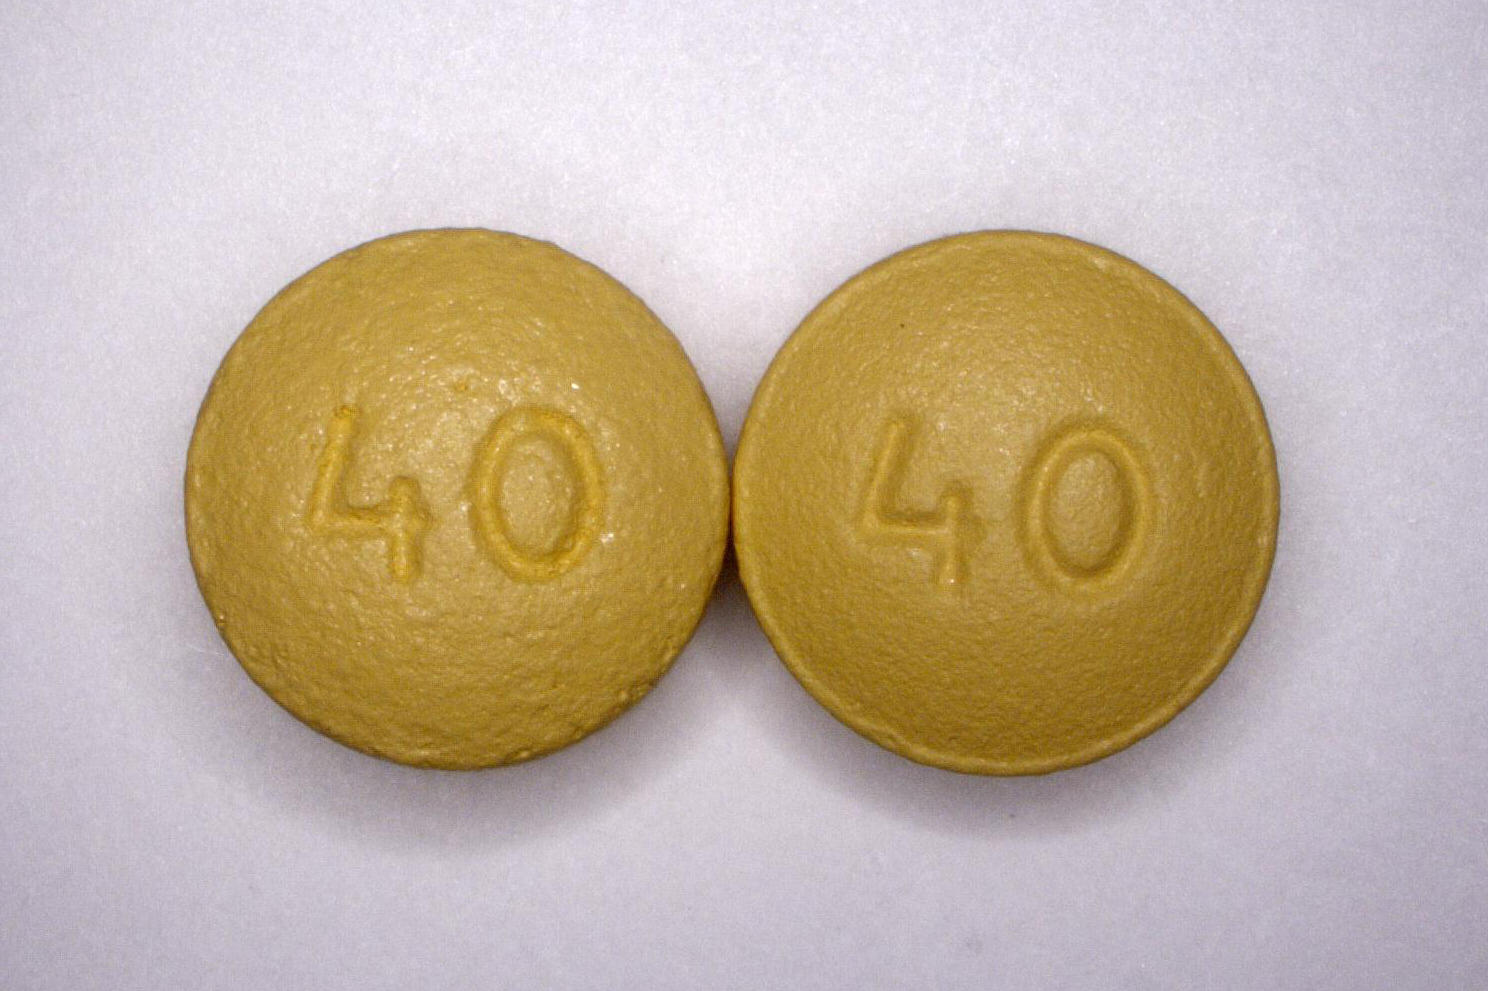 Oxycontin pills.
<br>Photo courtesy U.S. Drug Enforcement Agency